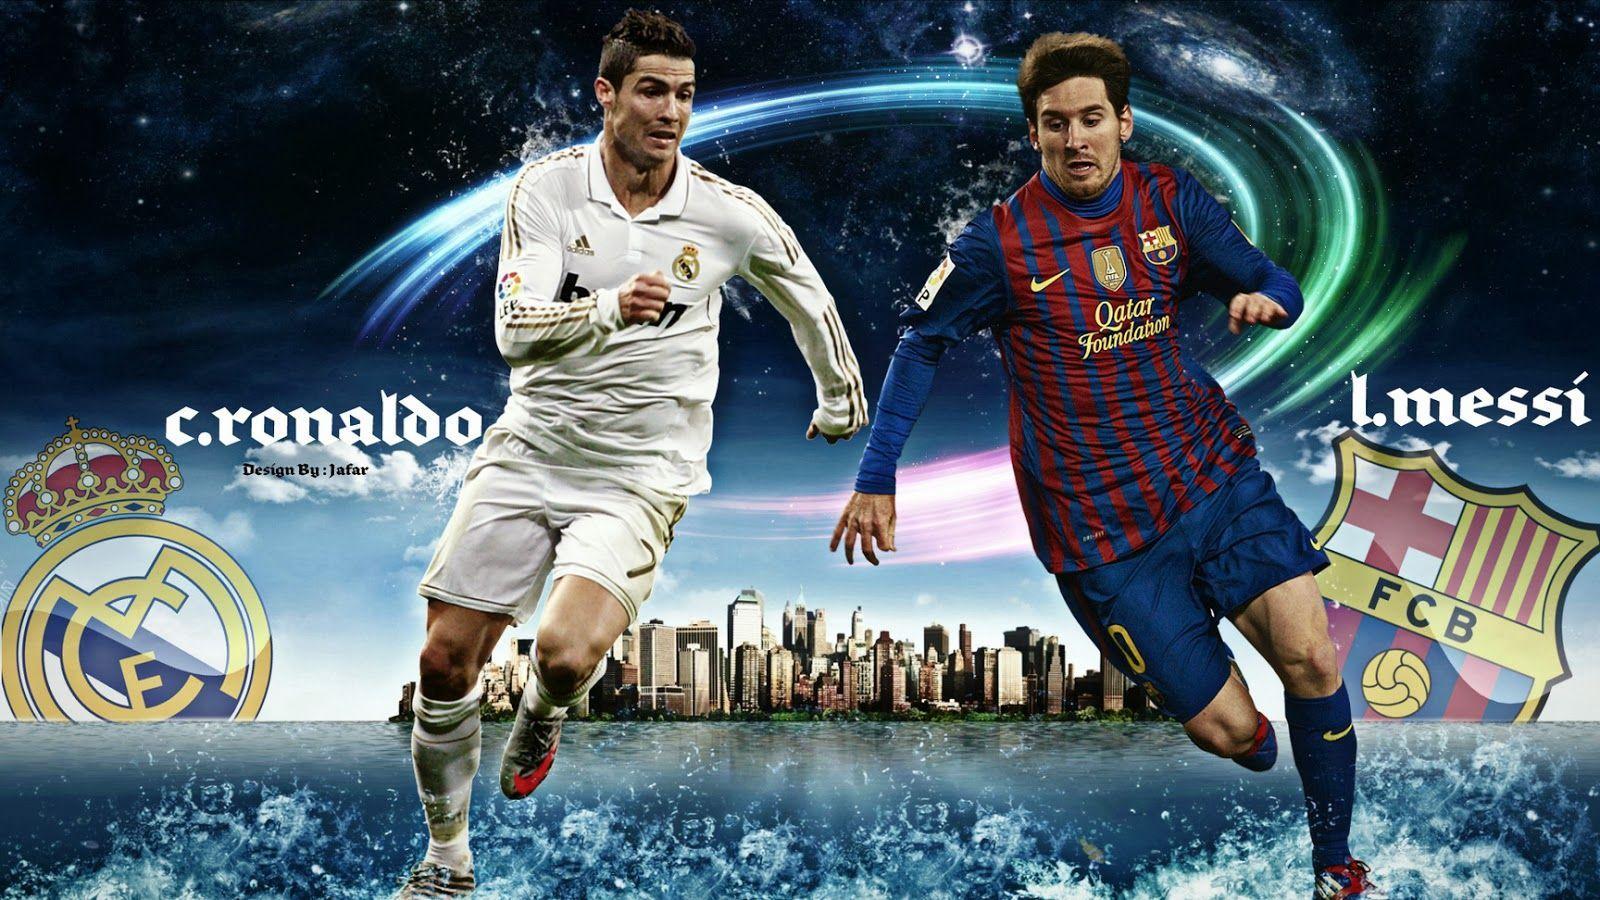 C. Ronaldo 2017 Wallpapers Vs Messi - Wallpaper Cave